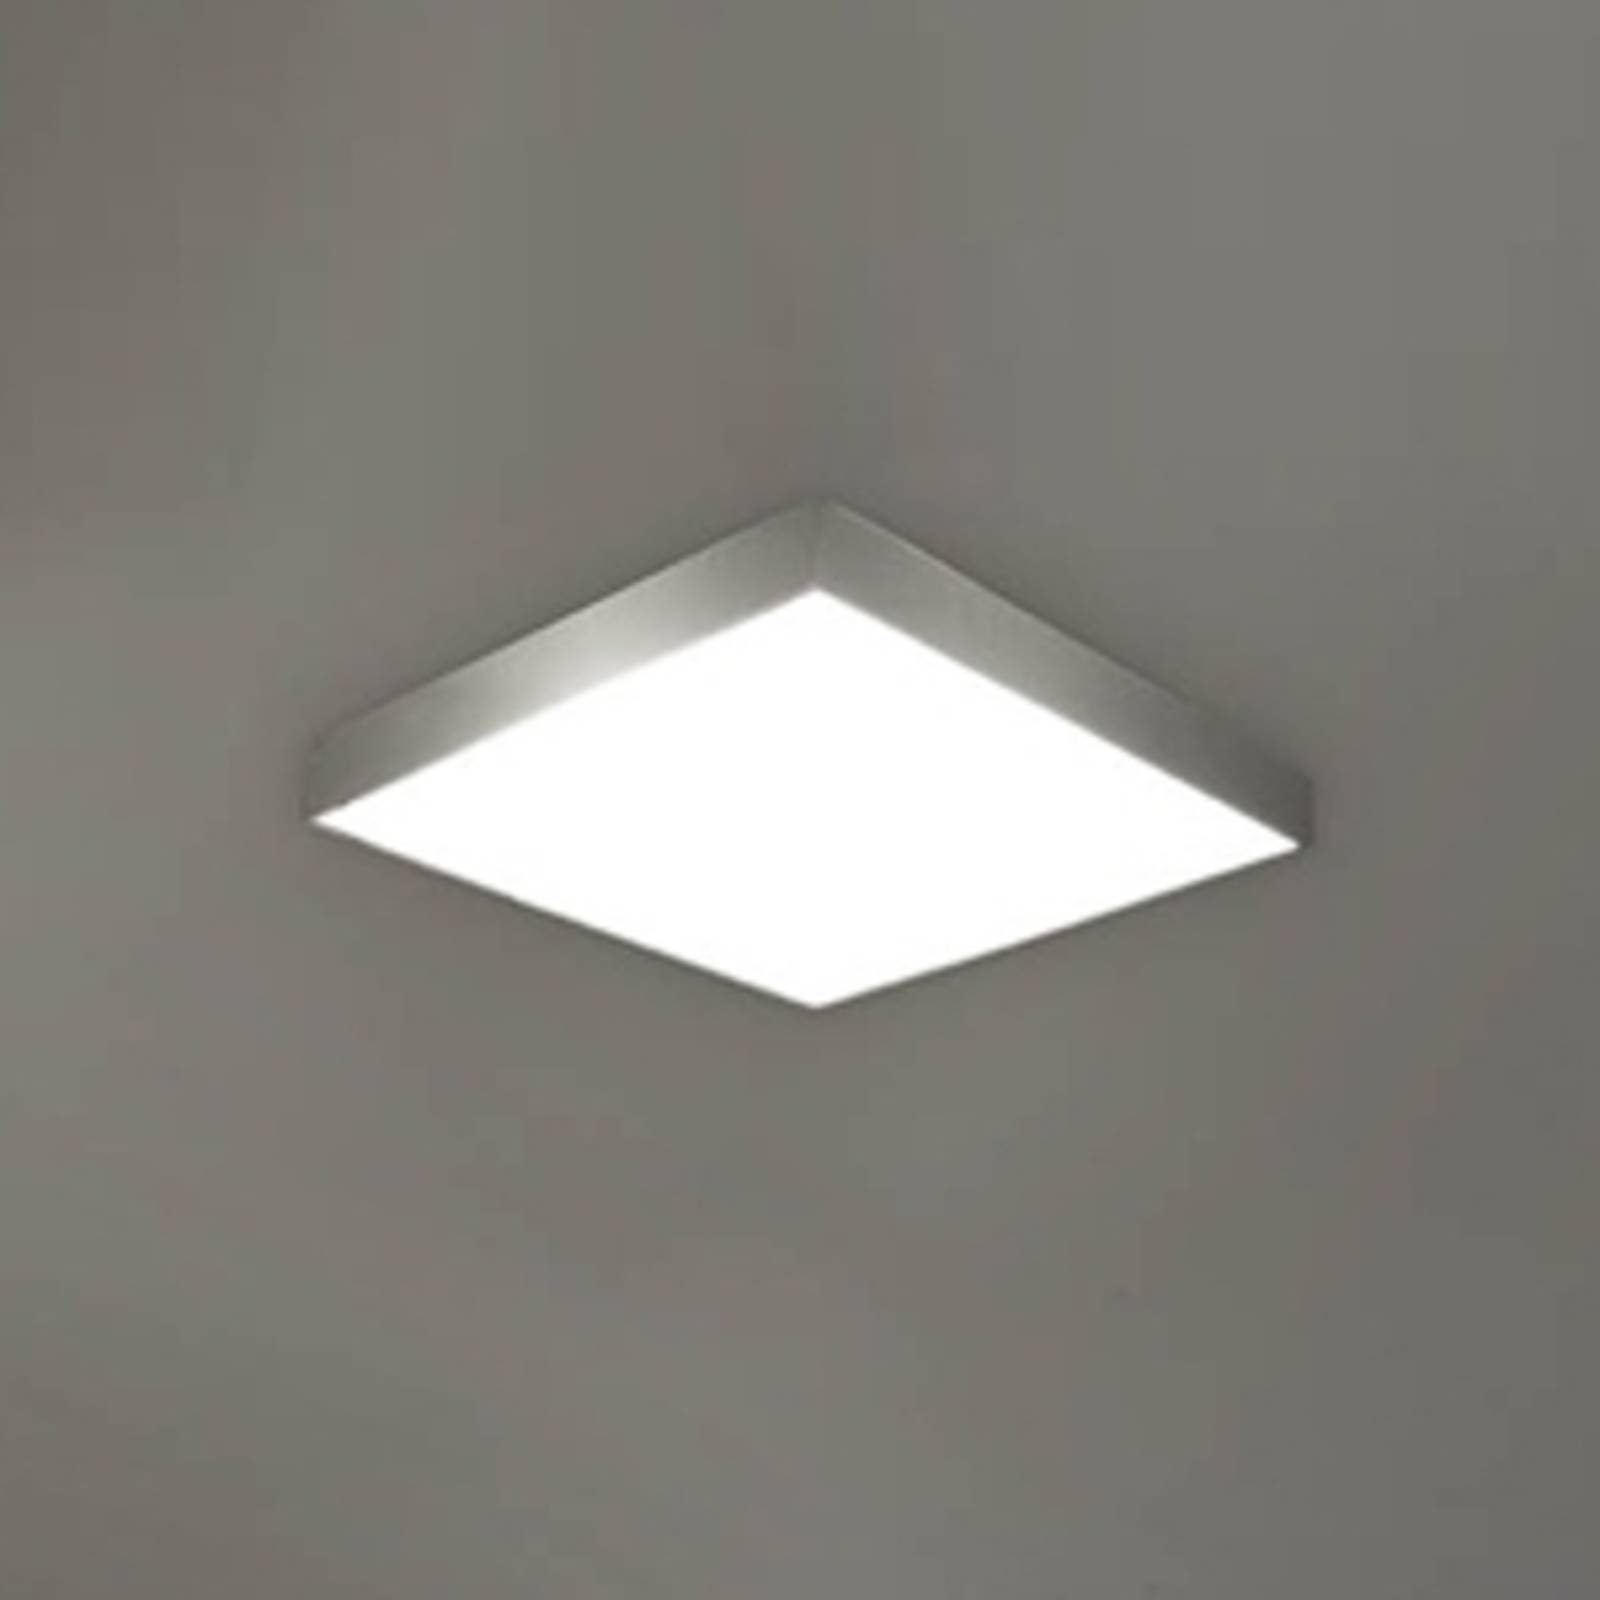 Pujol iluminación apolo mennyezeti lámpa, ip44, 35 cm, nikkel